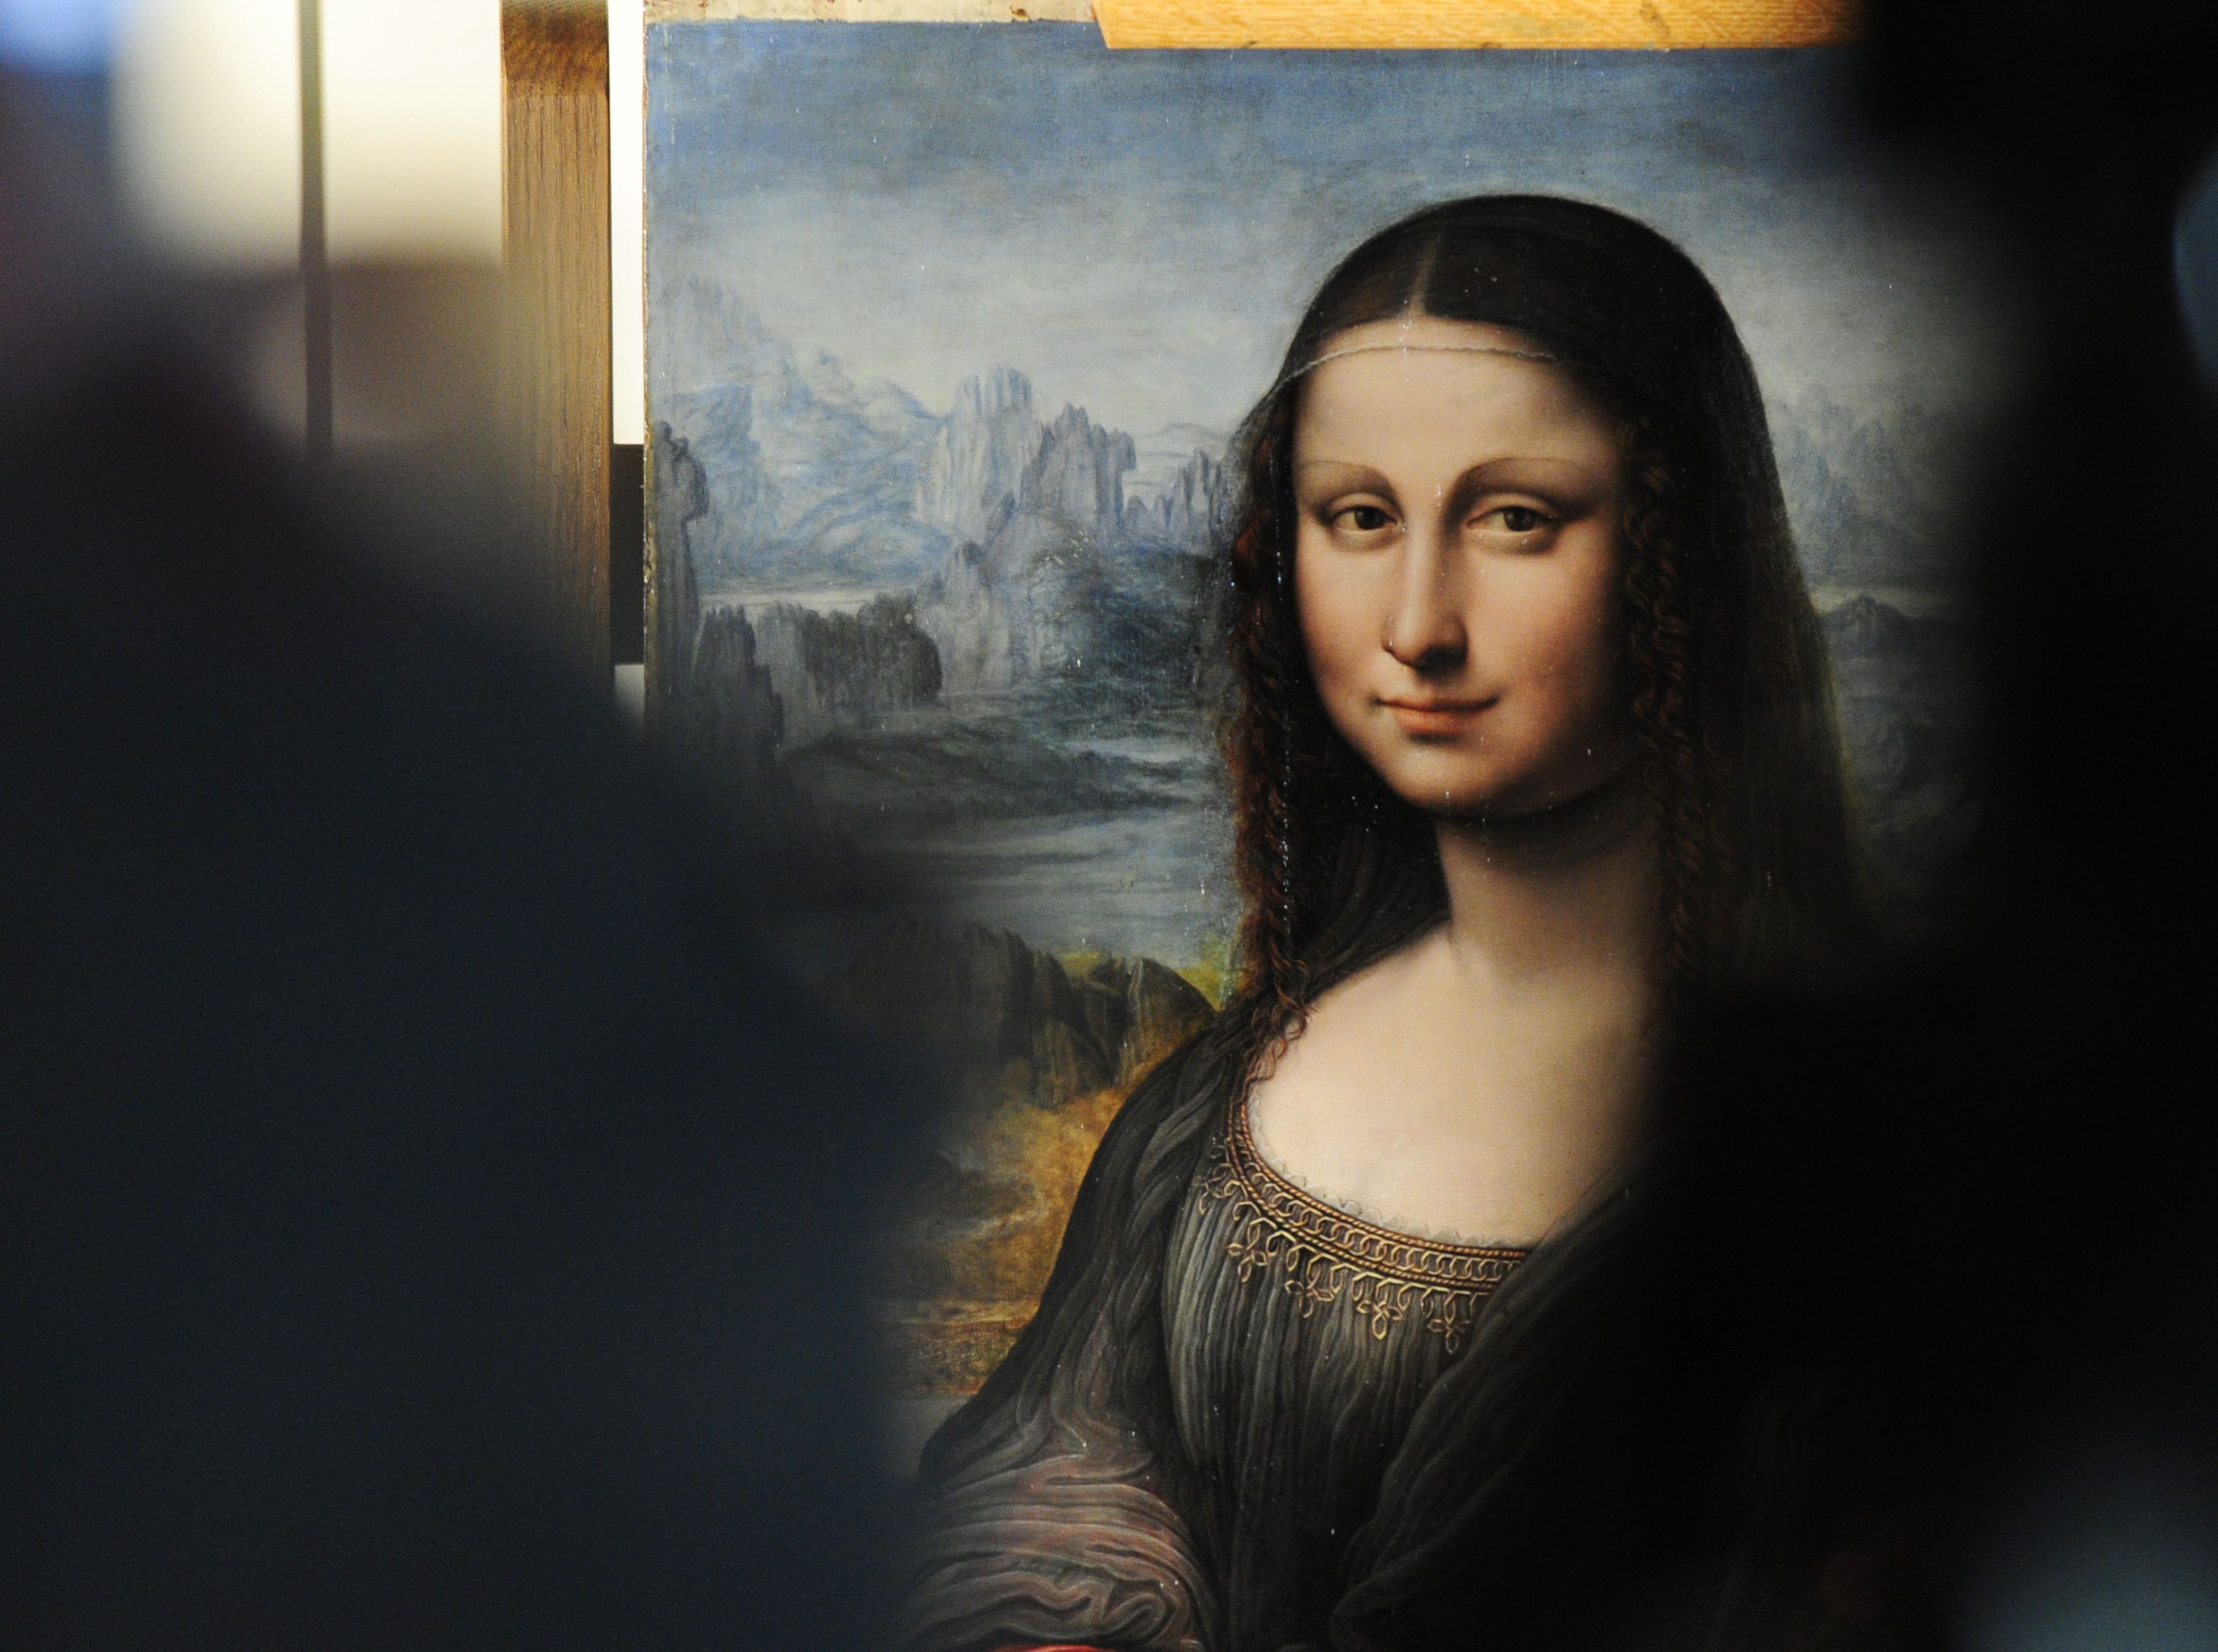 Copy of the Mona Lisa